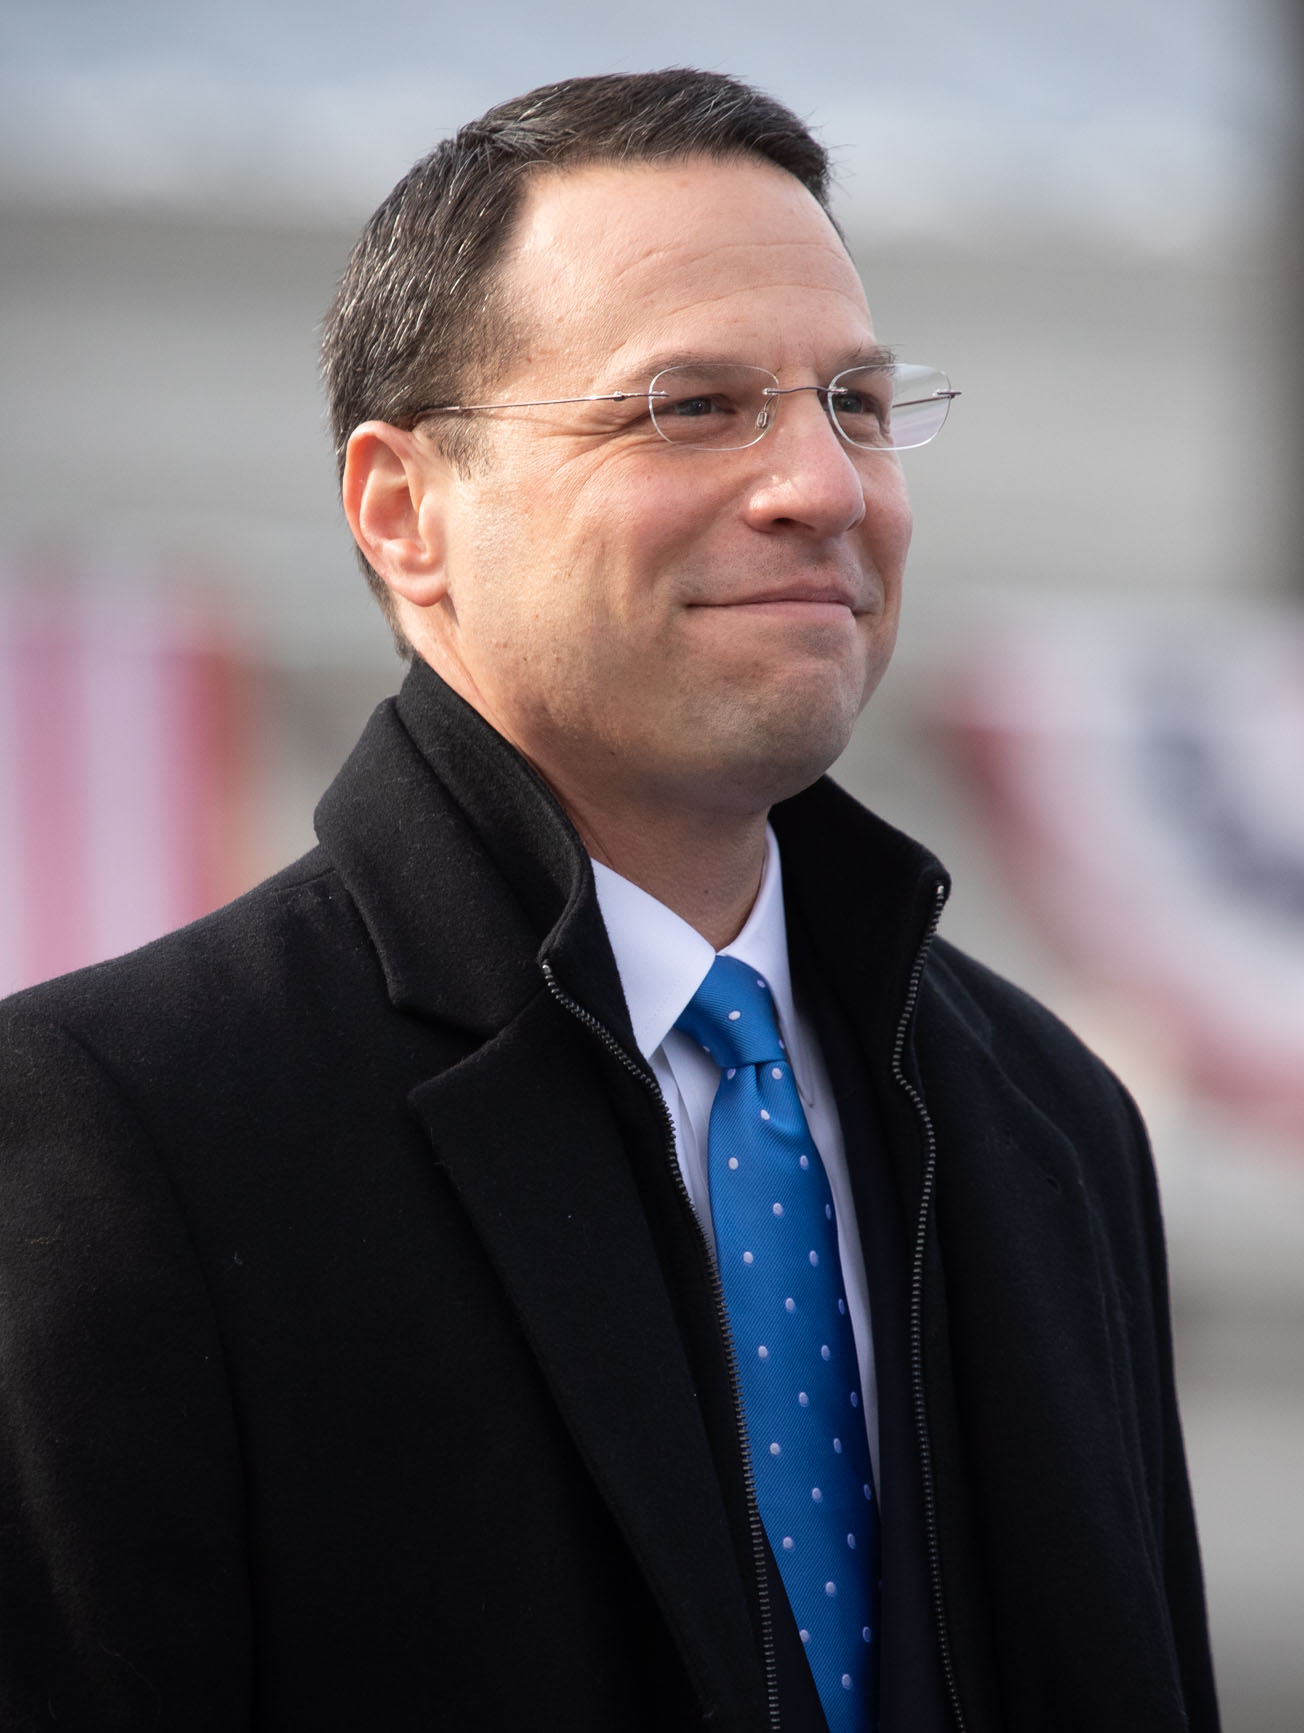  senator Josh Shapiro